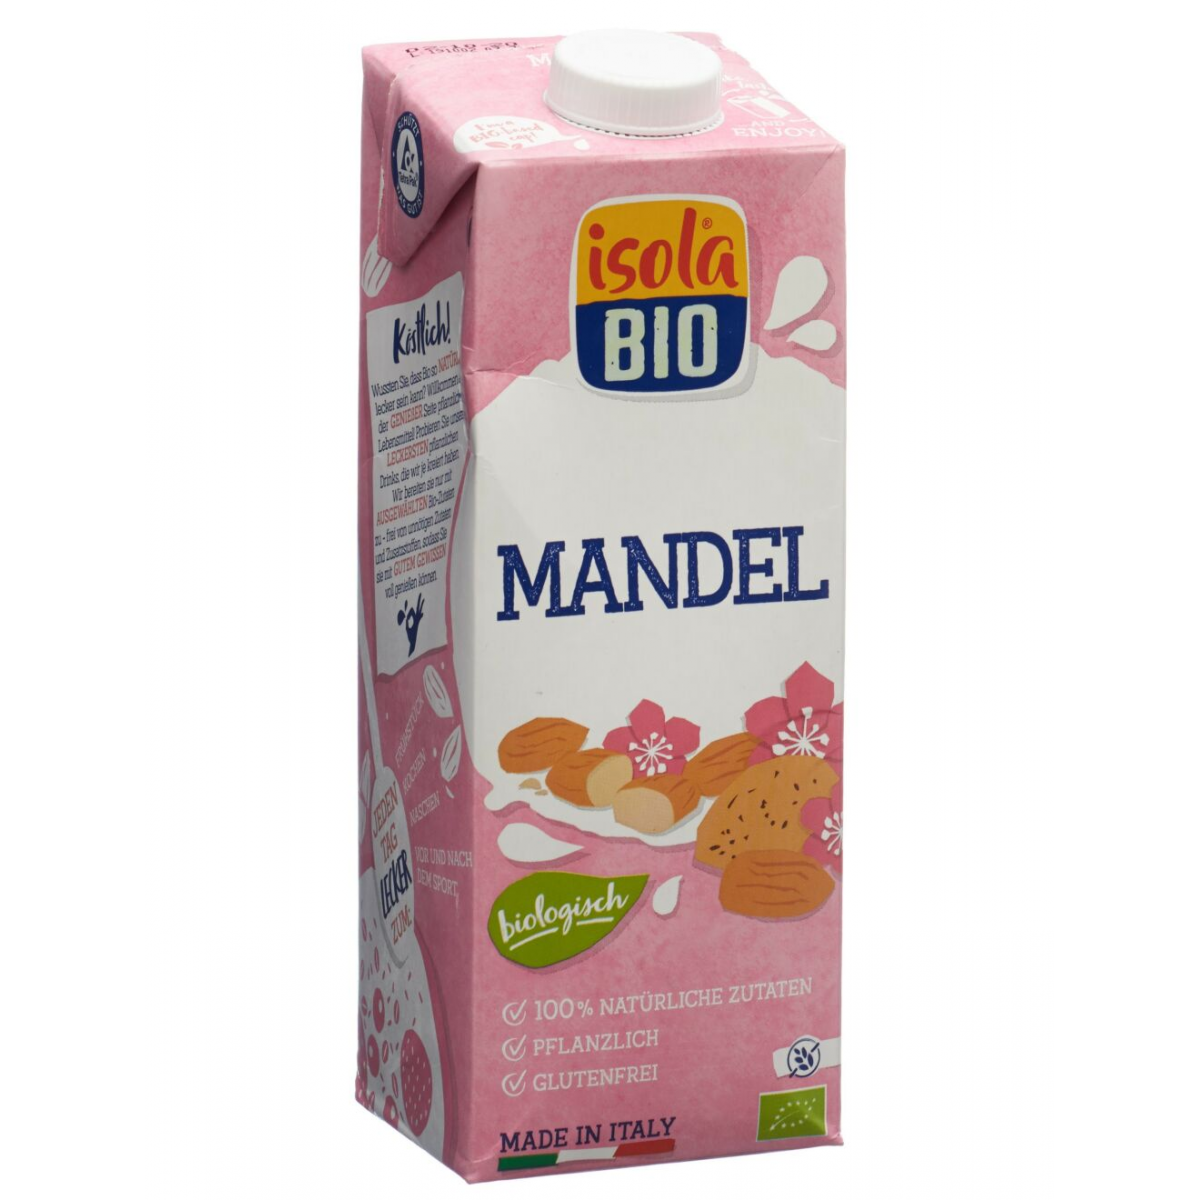 Mandel Drink Isola Bio 1l